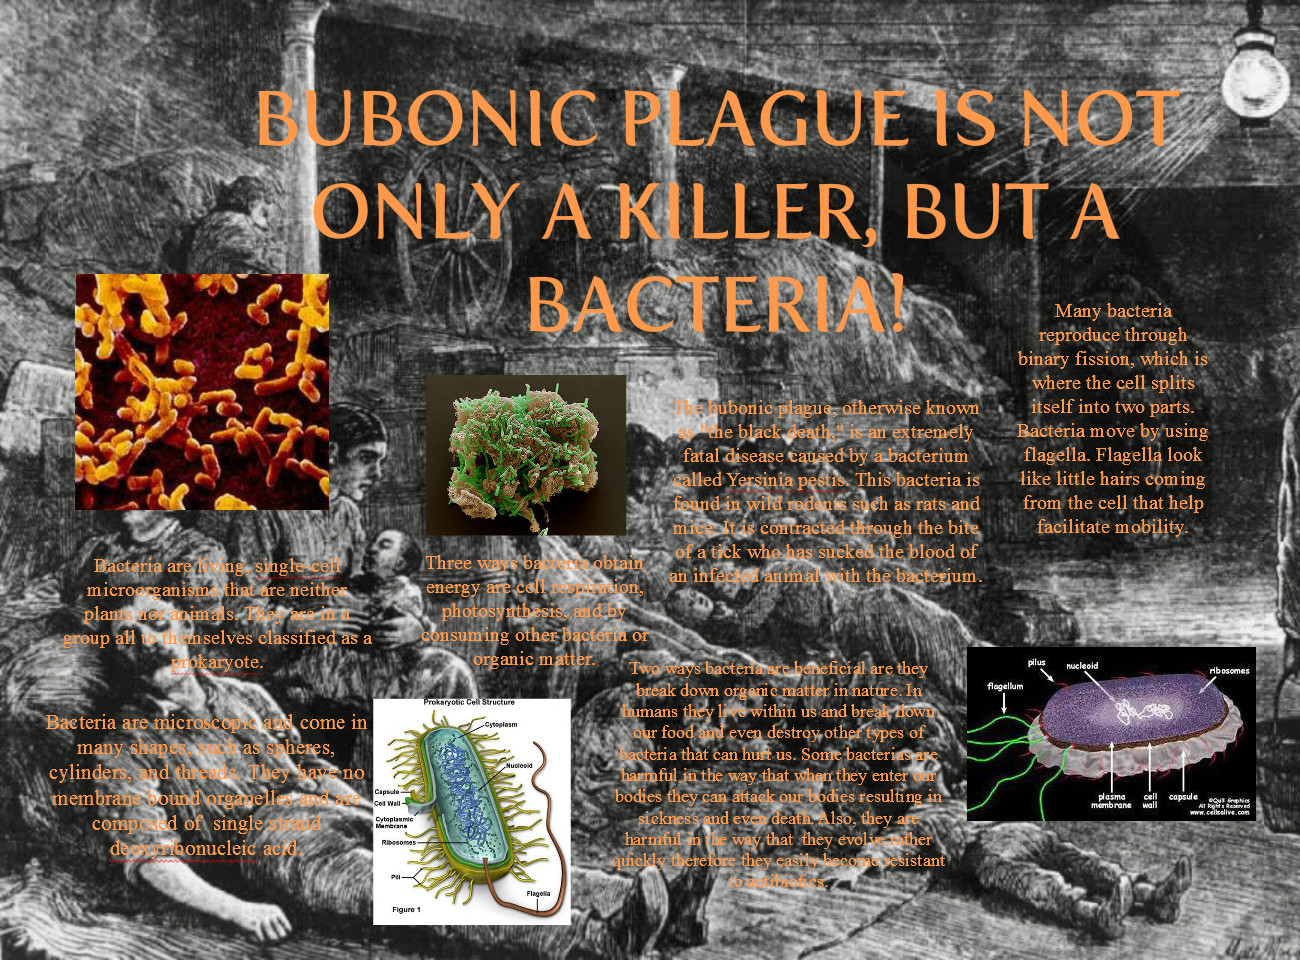 Bubonic Plague Black Death Quotes. QuotesGram